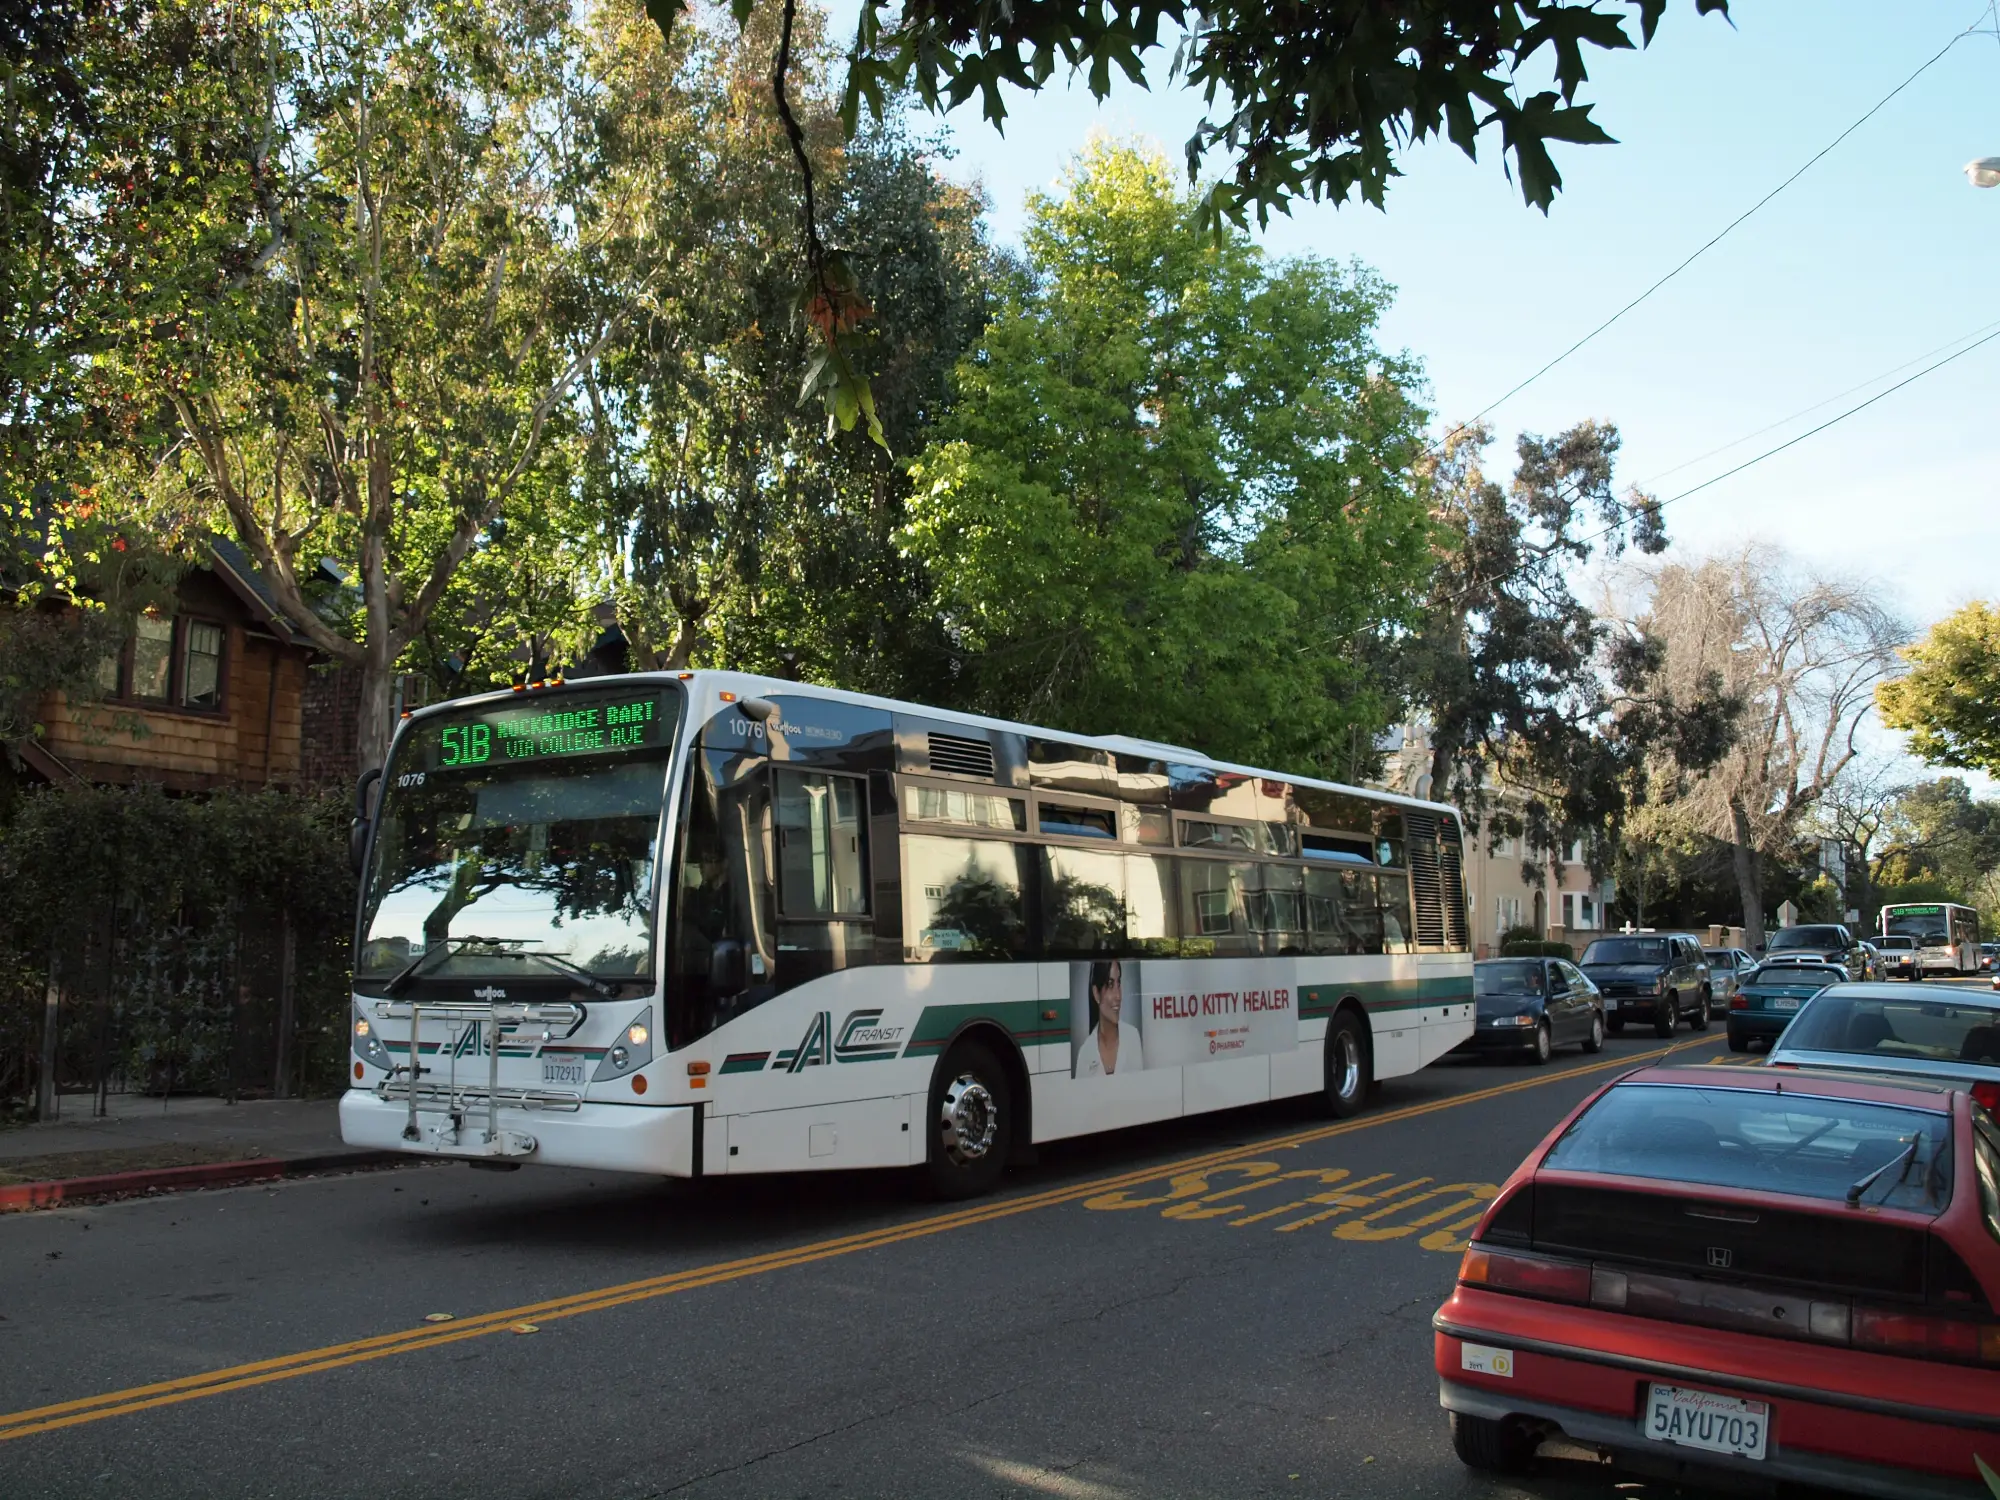 An AC Transit bus on the street.